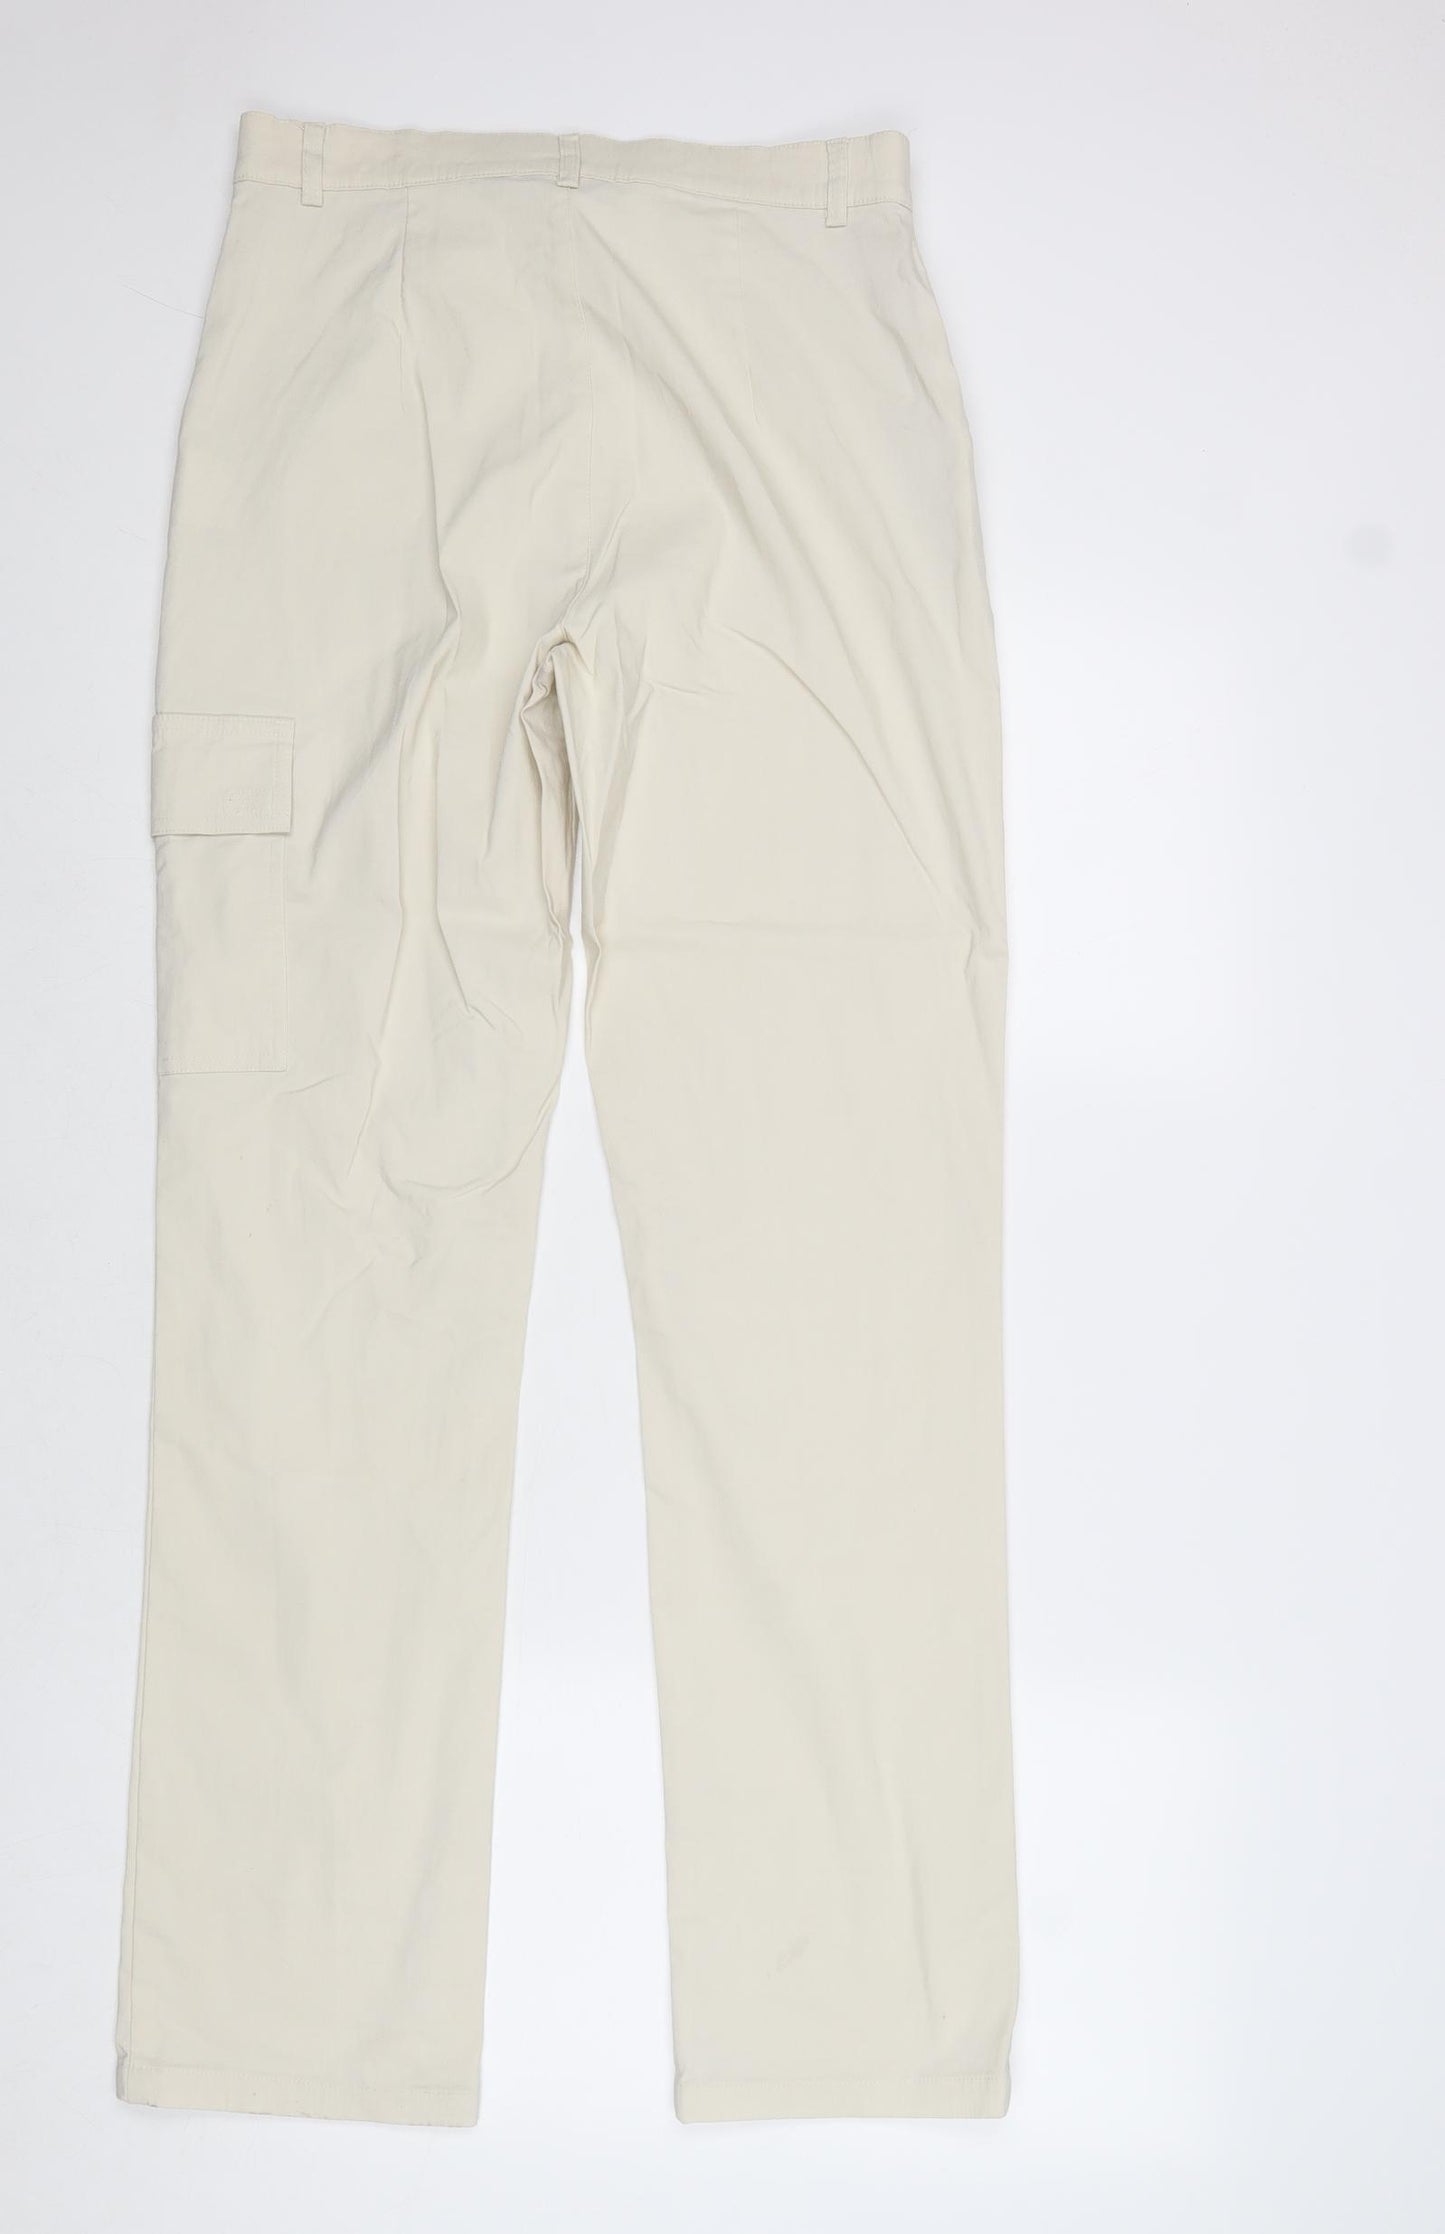 Exlindexlind Womens Beige Viscose Trousers Size 12 Regular Zip